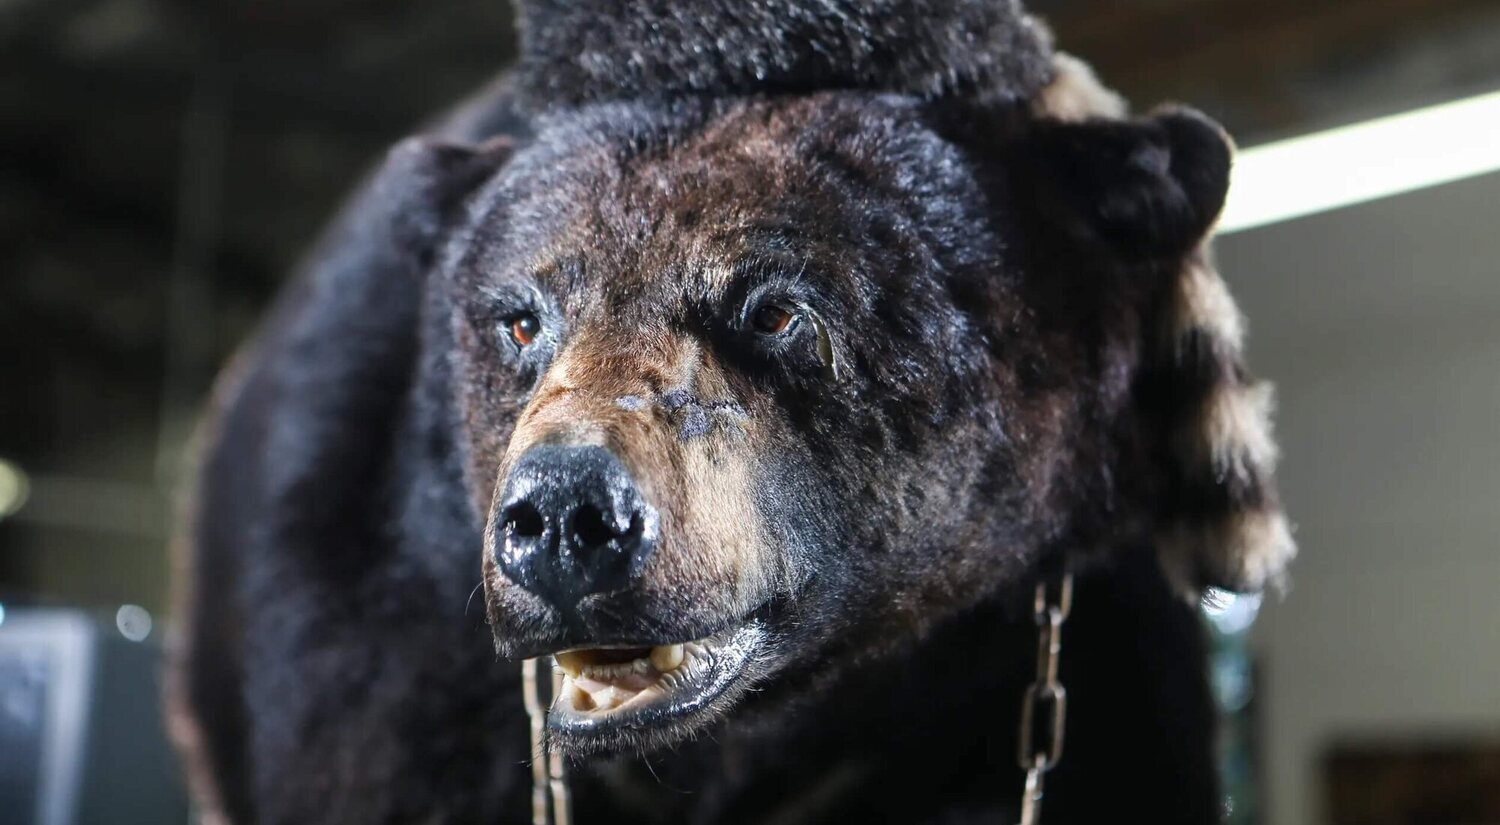 La historia real de 'Cocaine Bear', el "oso vicioso" que consumió 30 kilos de cocaína